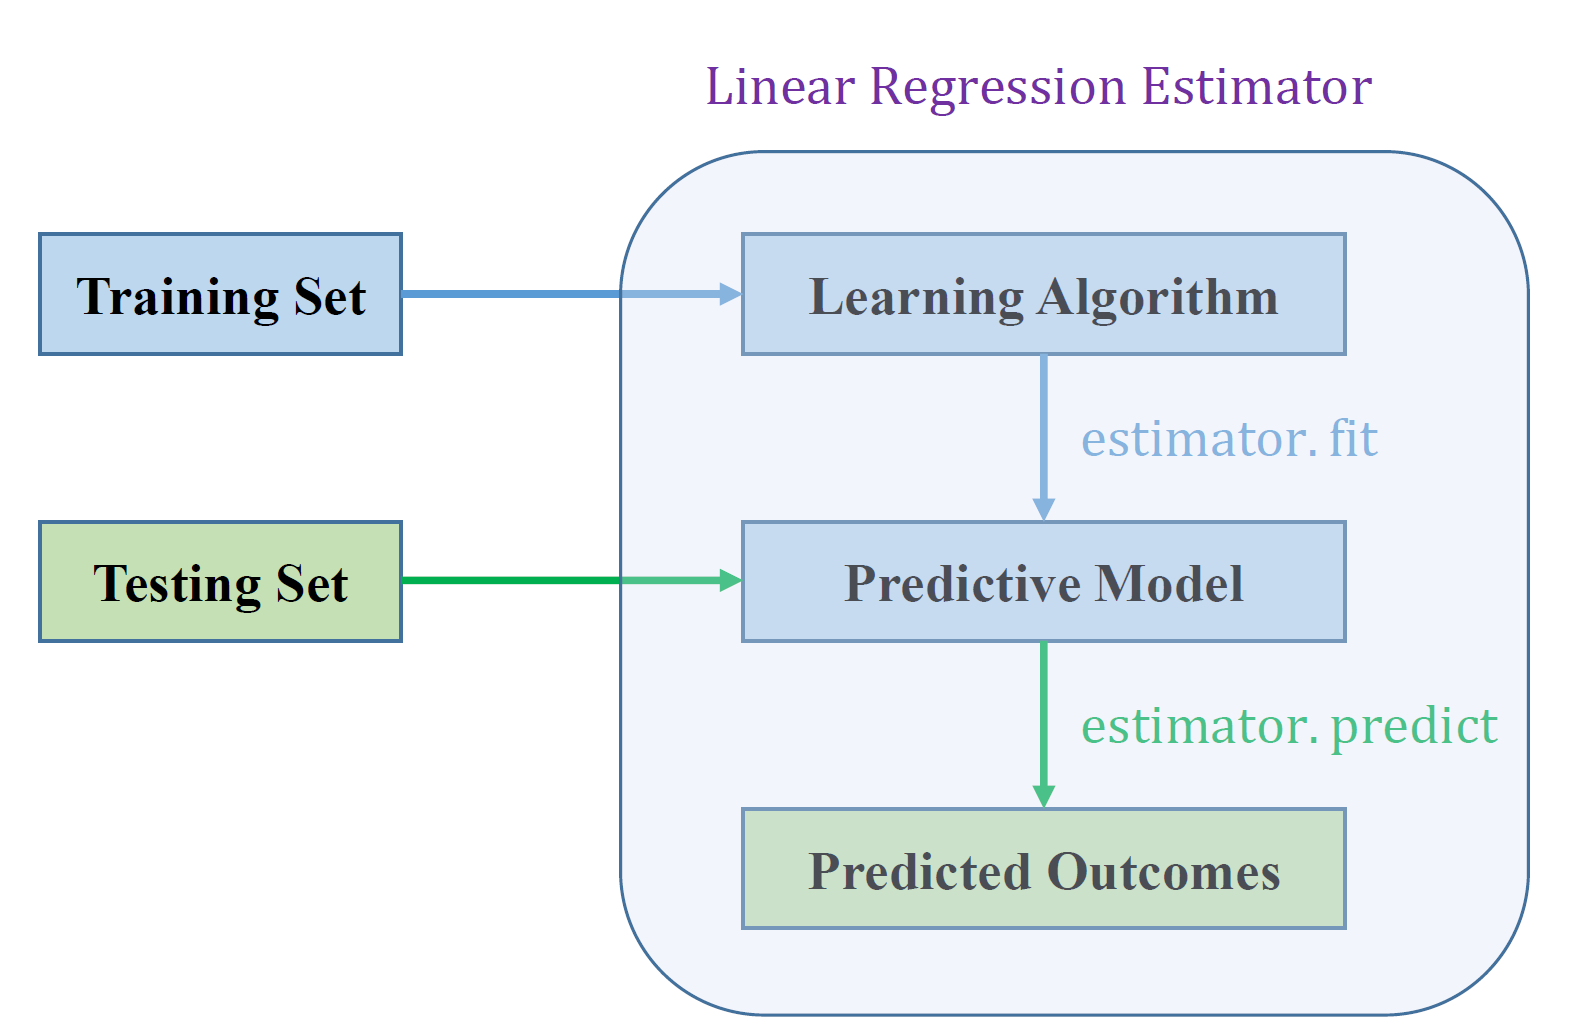 machine learning predictive analytics